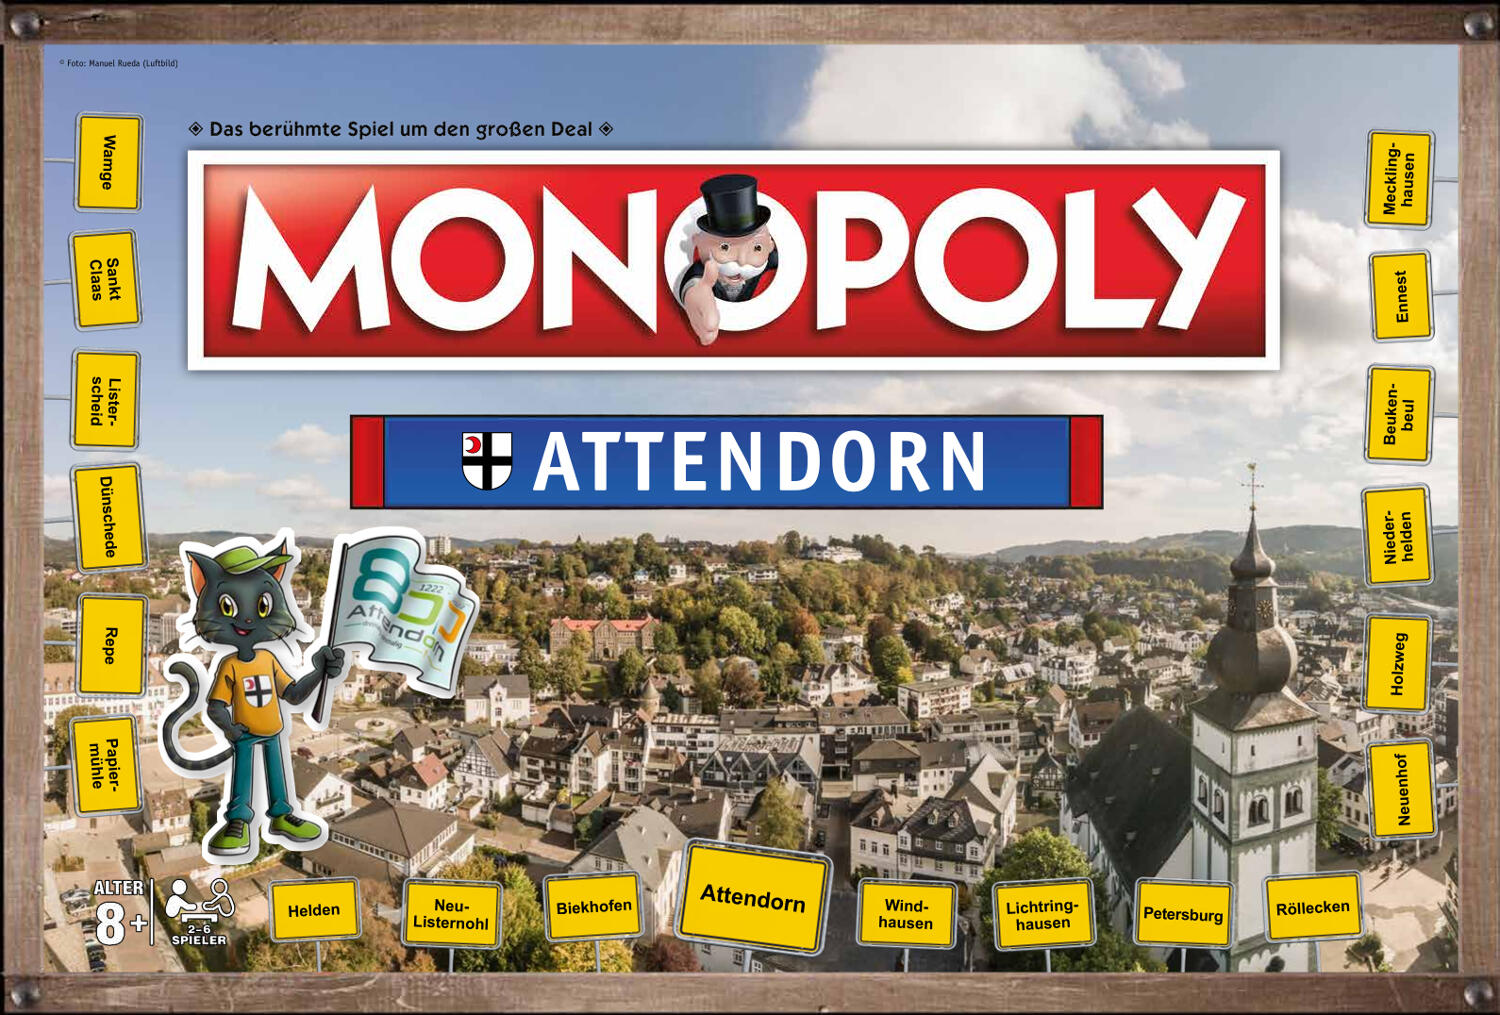 Monopoly - Attendorn